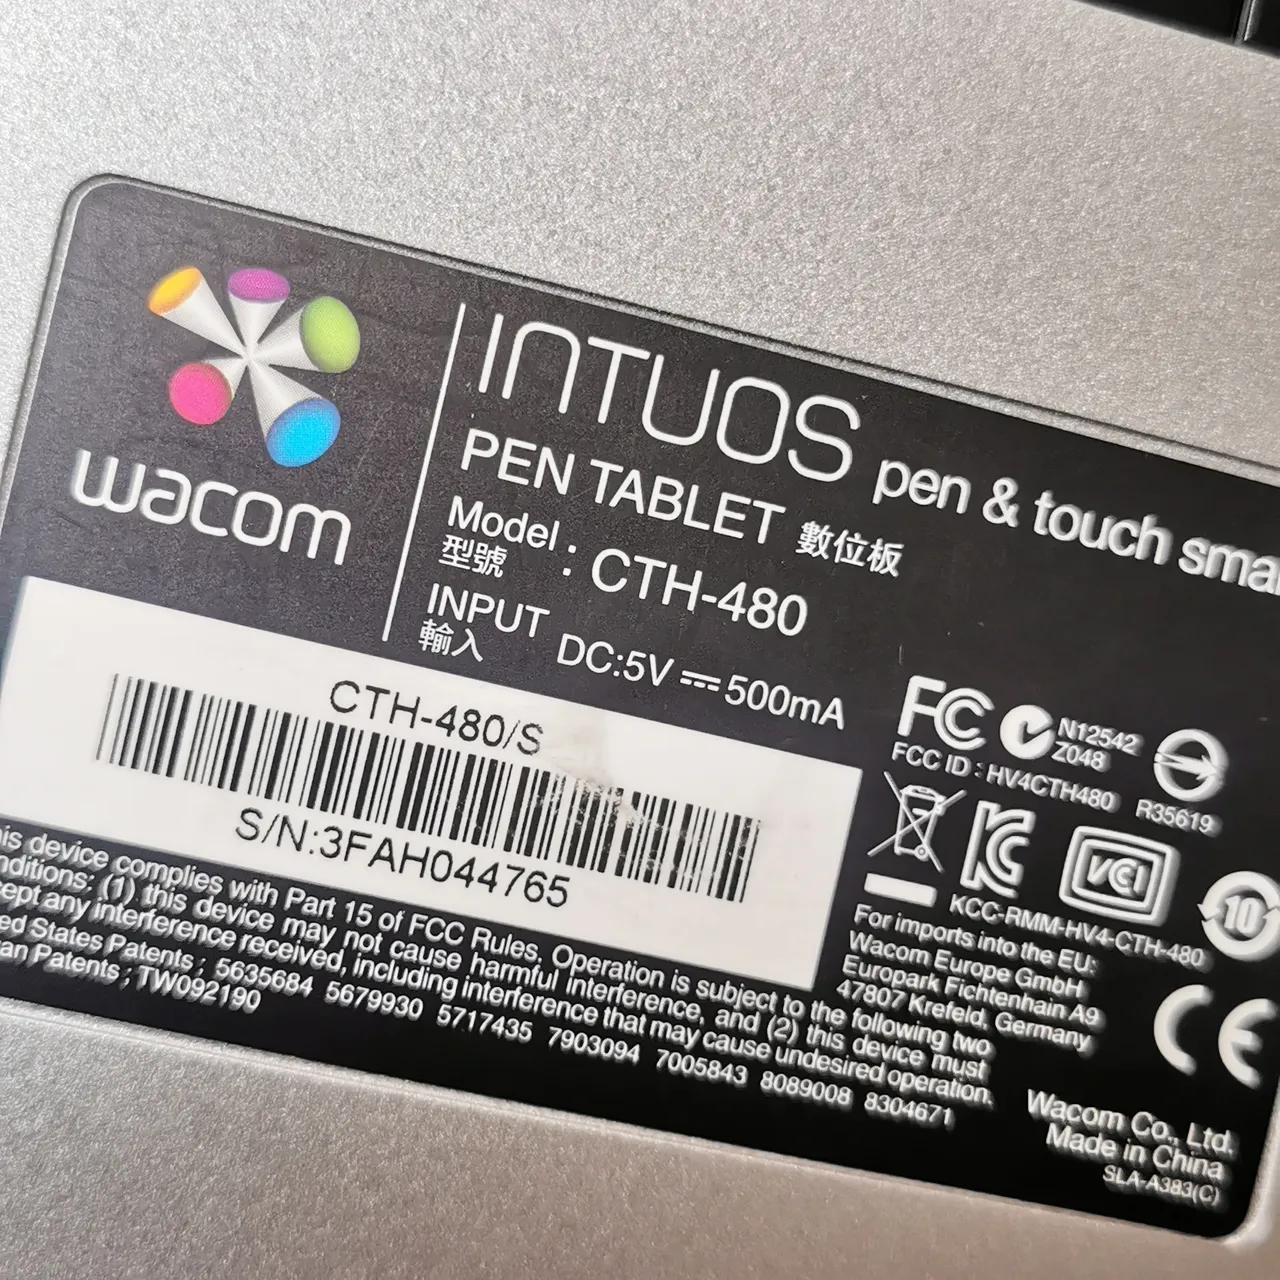 Wacom Intuos tablet cth 480 photo 4